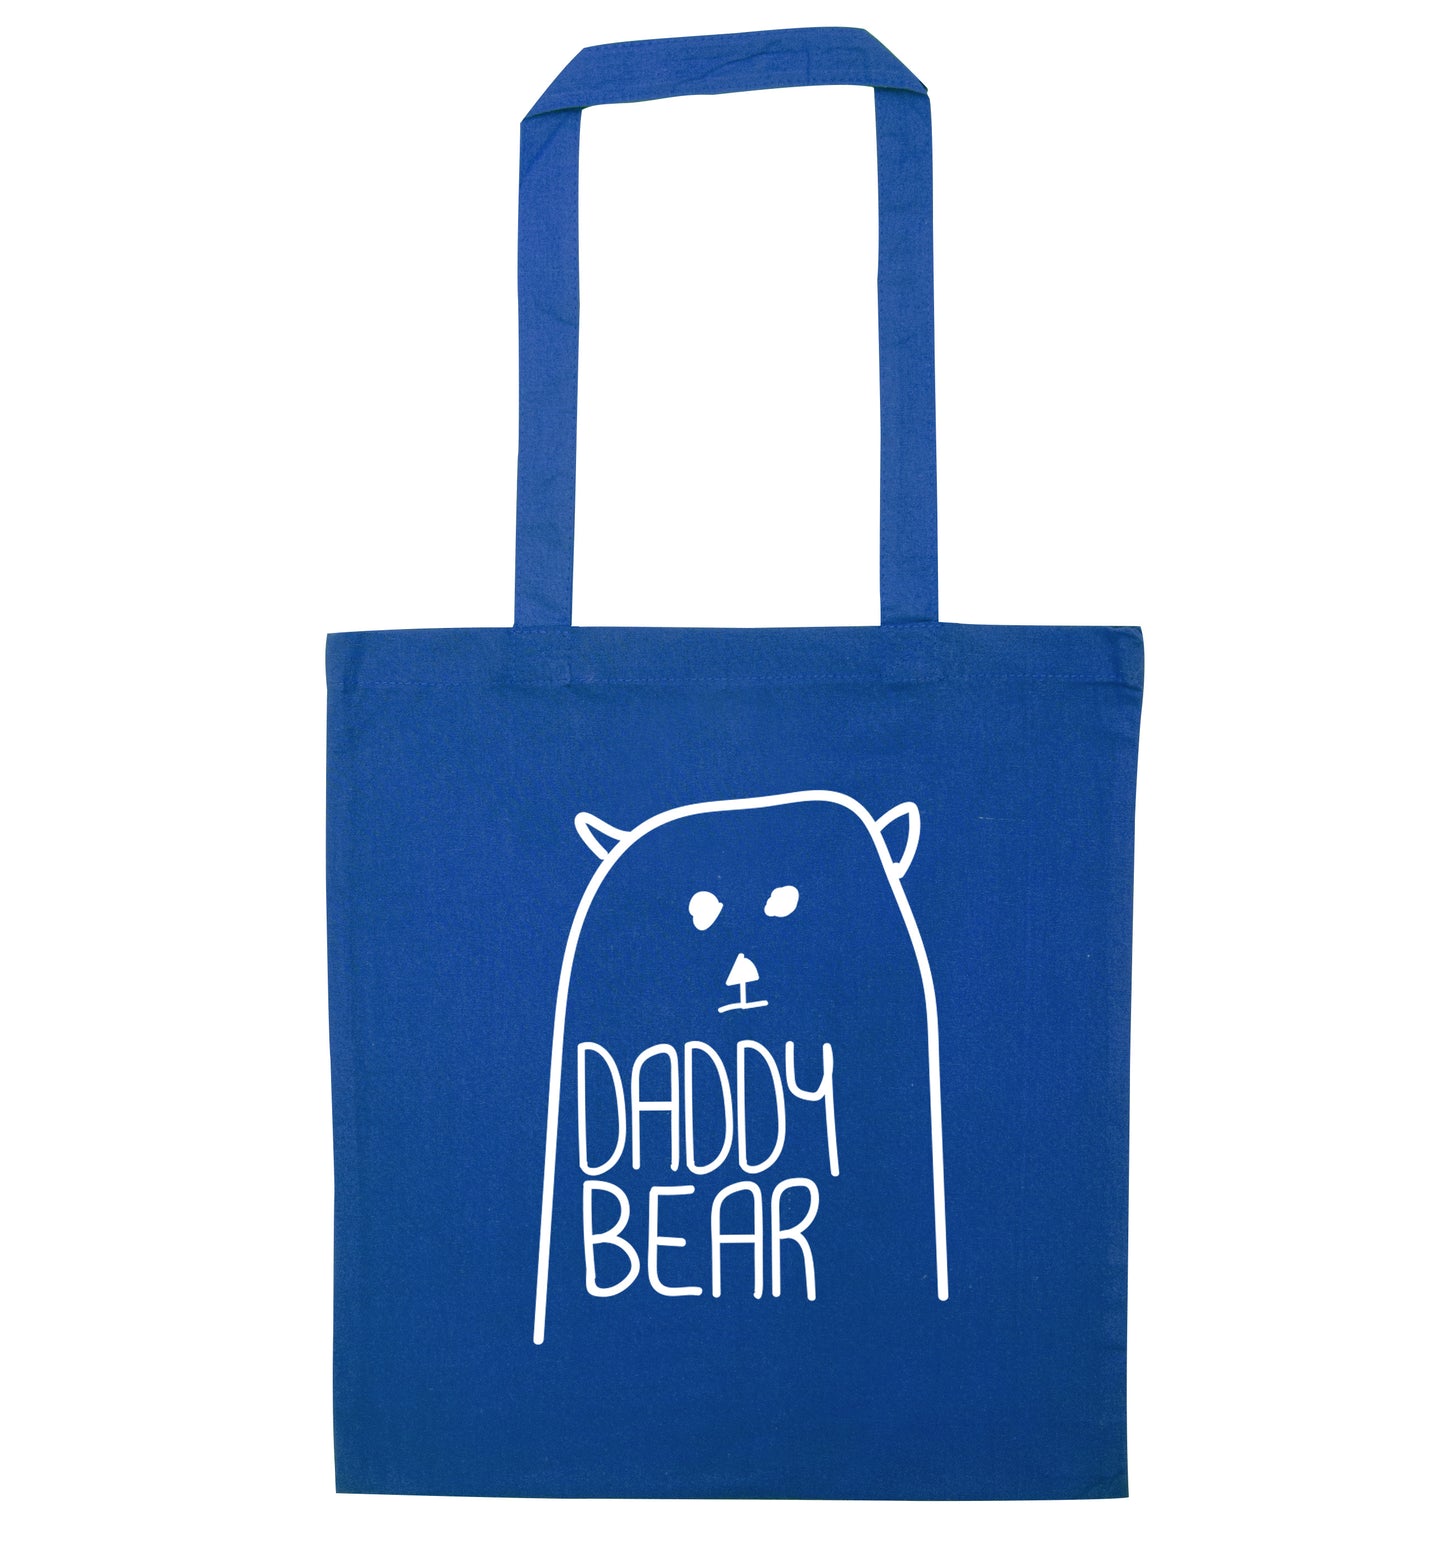 Daddy bear blue tote bag